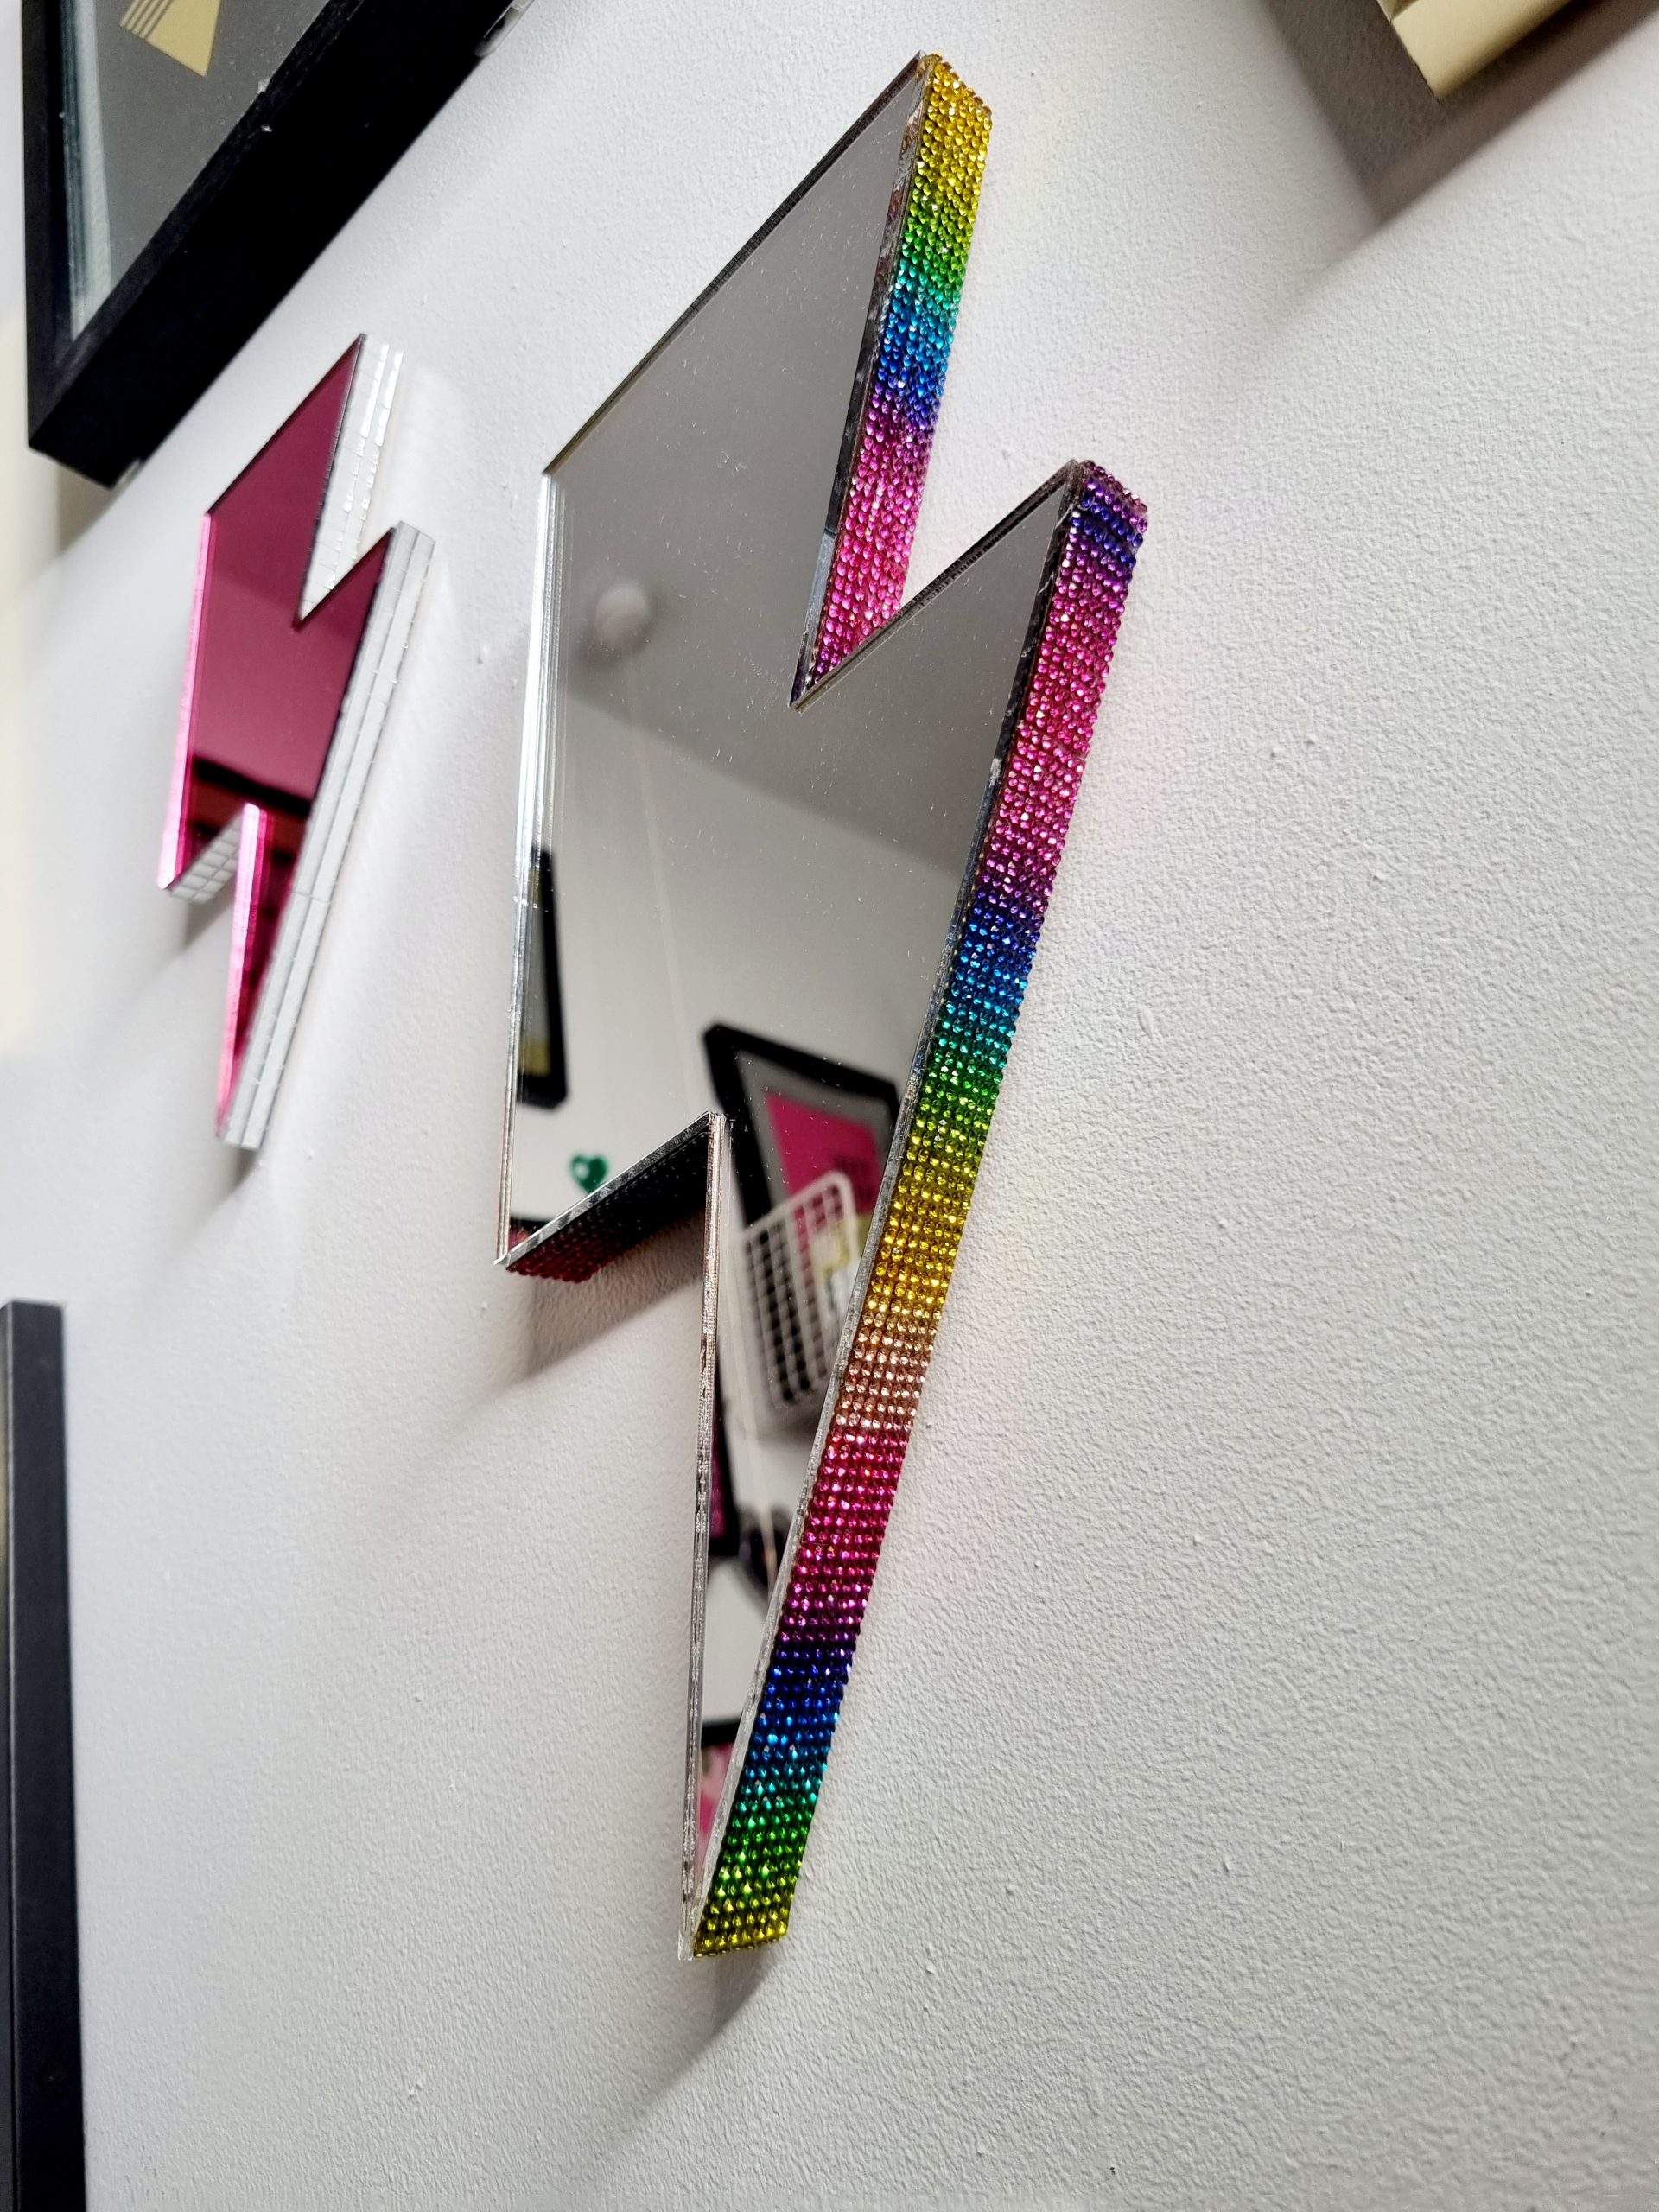 Mirrored rainbow lightning bolt wall art